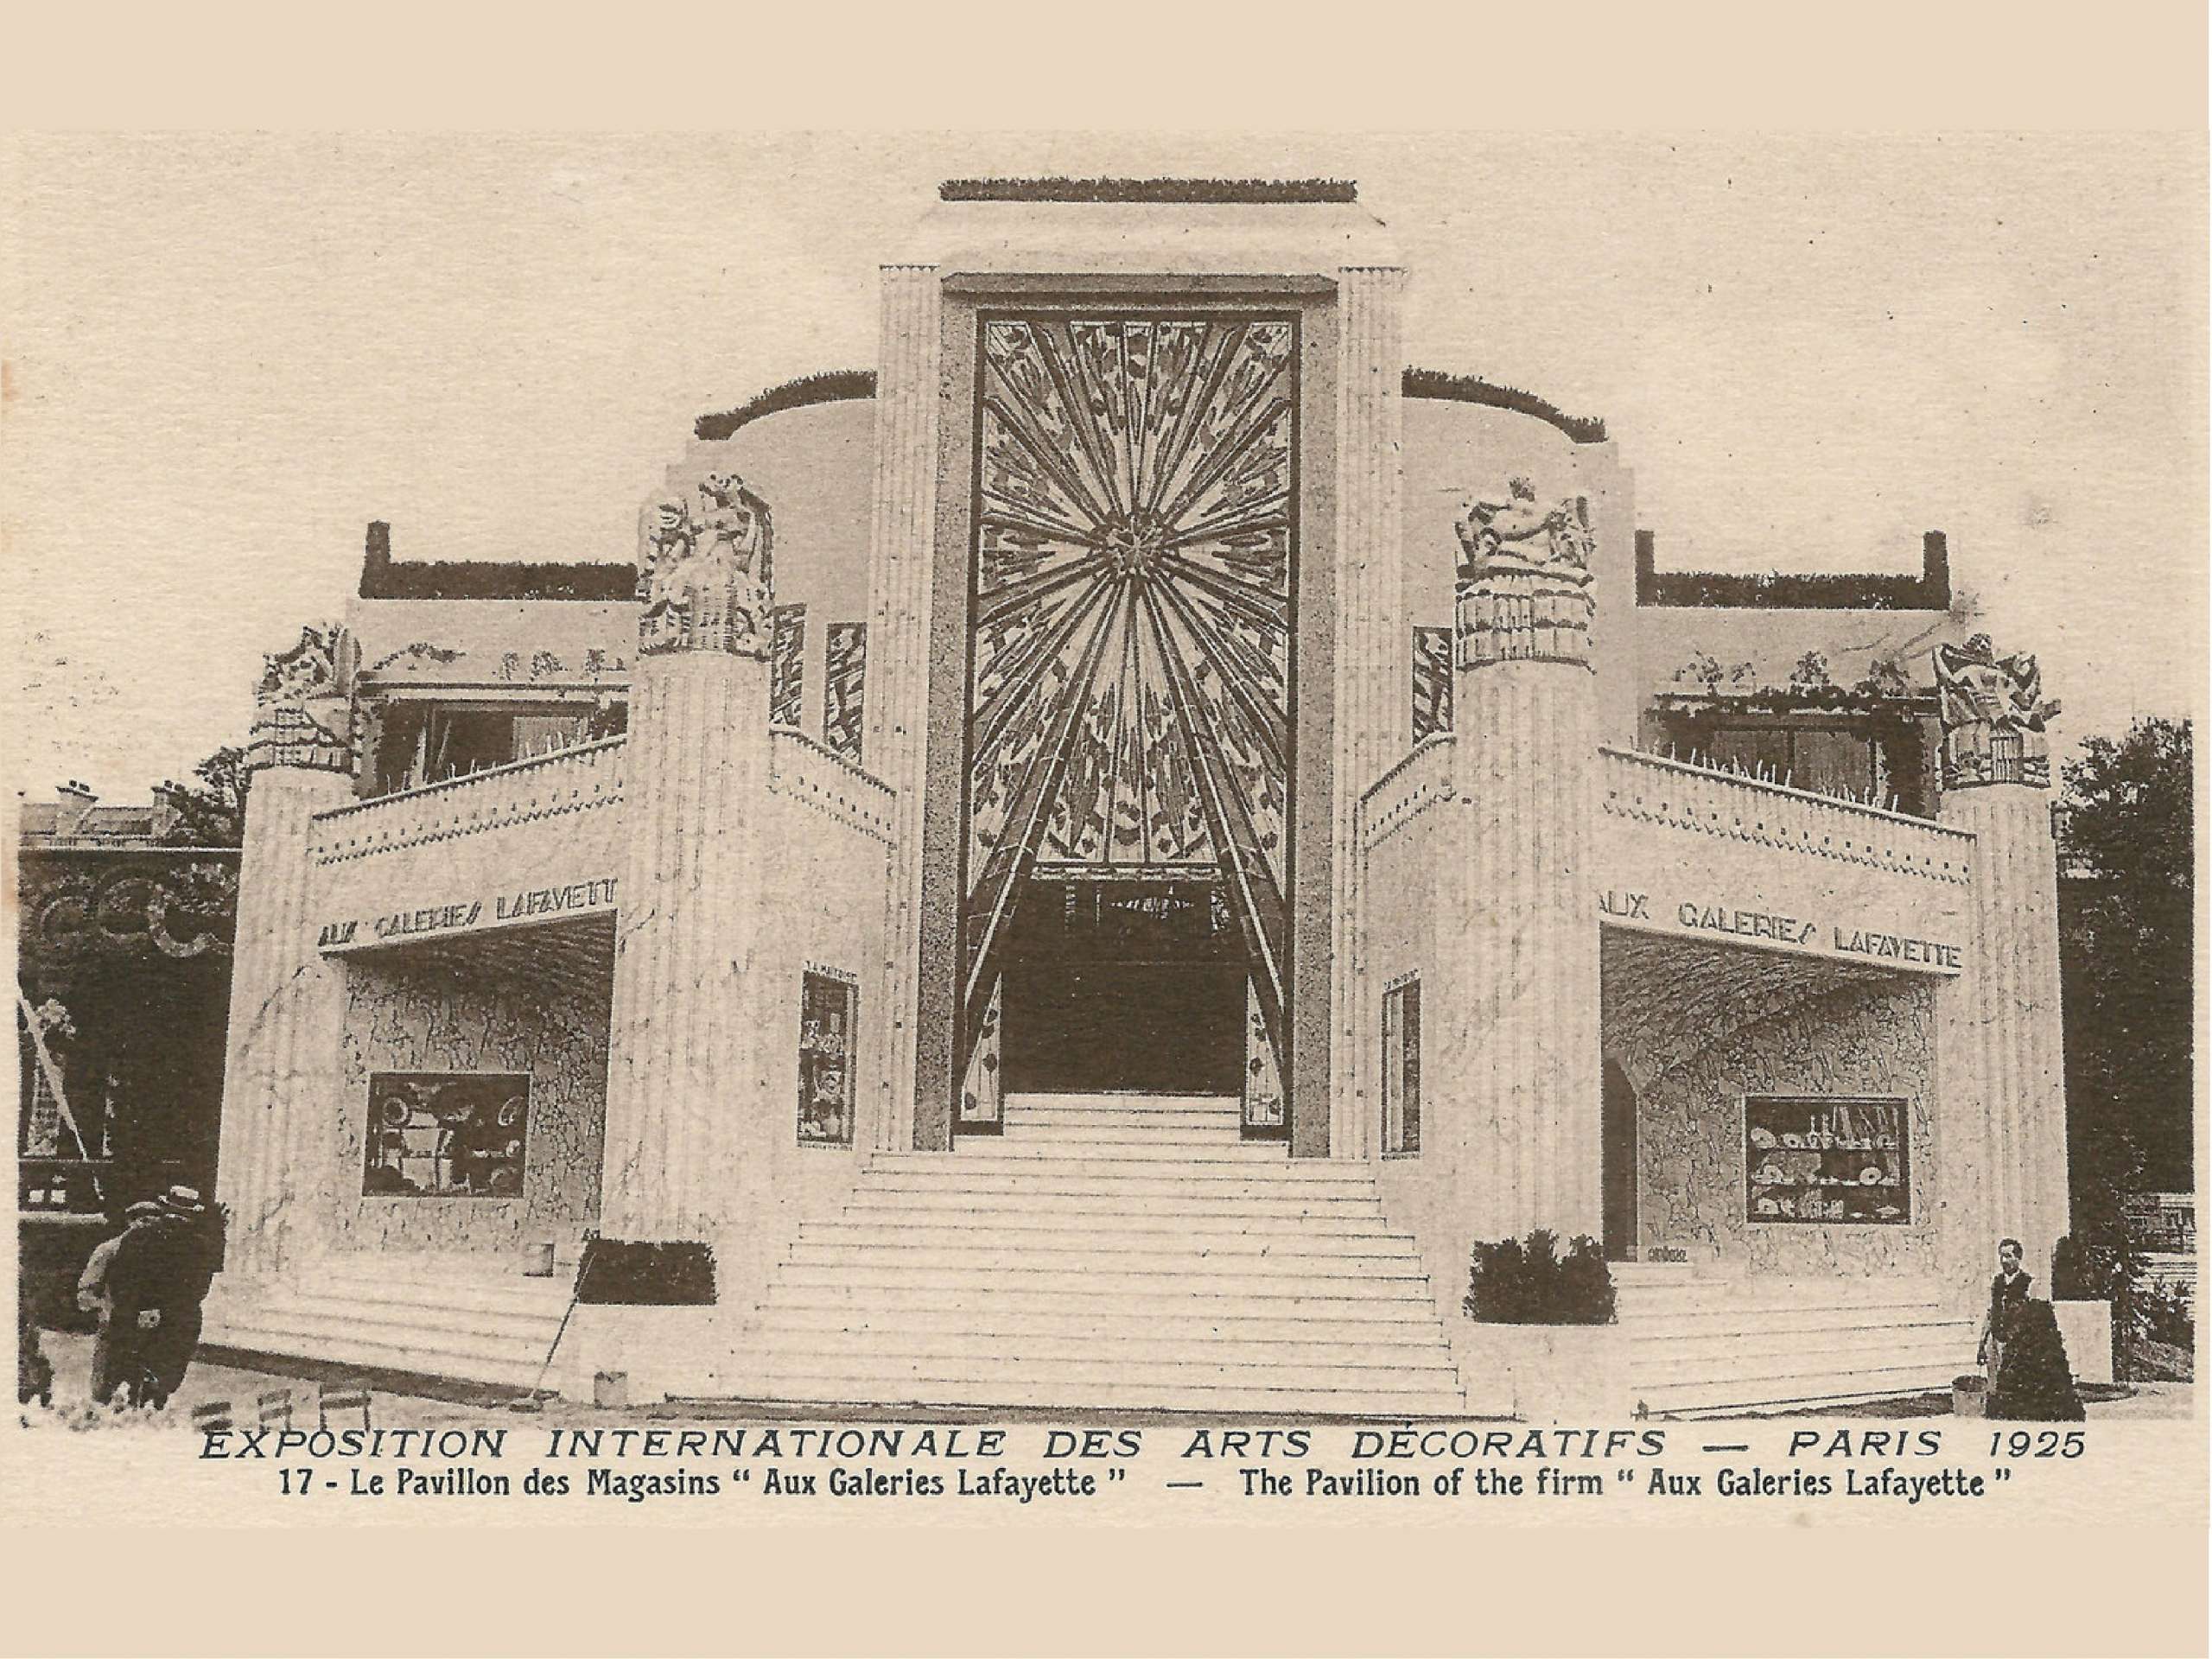 （ Galeries Lafayette 門口的旭日型裝飾為典型 Art Deco 元素。）